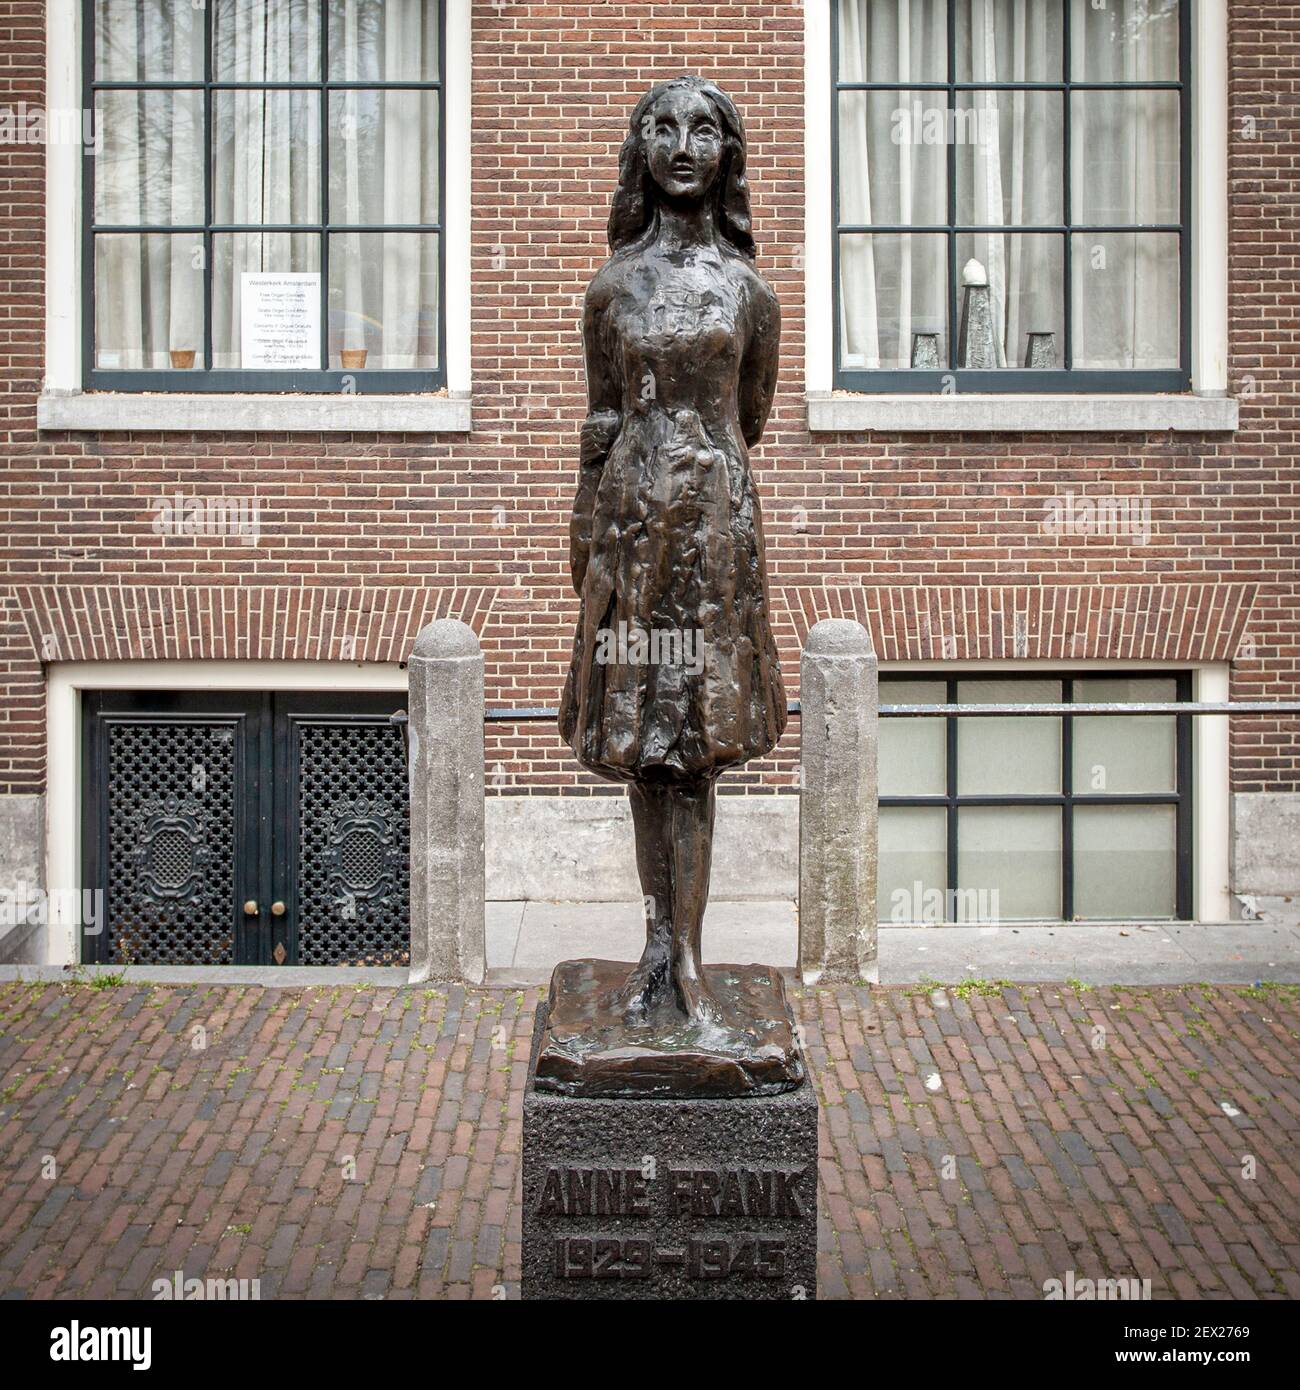 Statue of Anne Frank by sculptor Mari Andriessen, outside the Anne Frank house museum & Westerkerk church, Westermarkt, Amsterdam, Netherlands Stock Photo